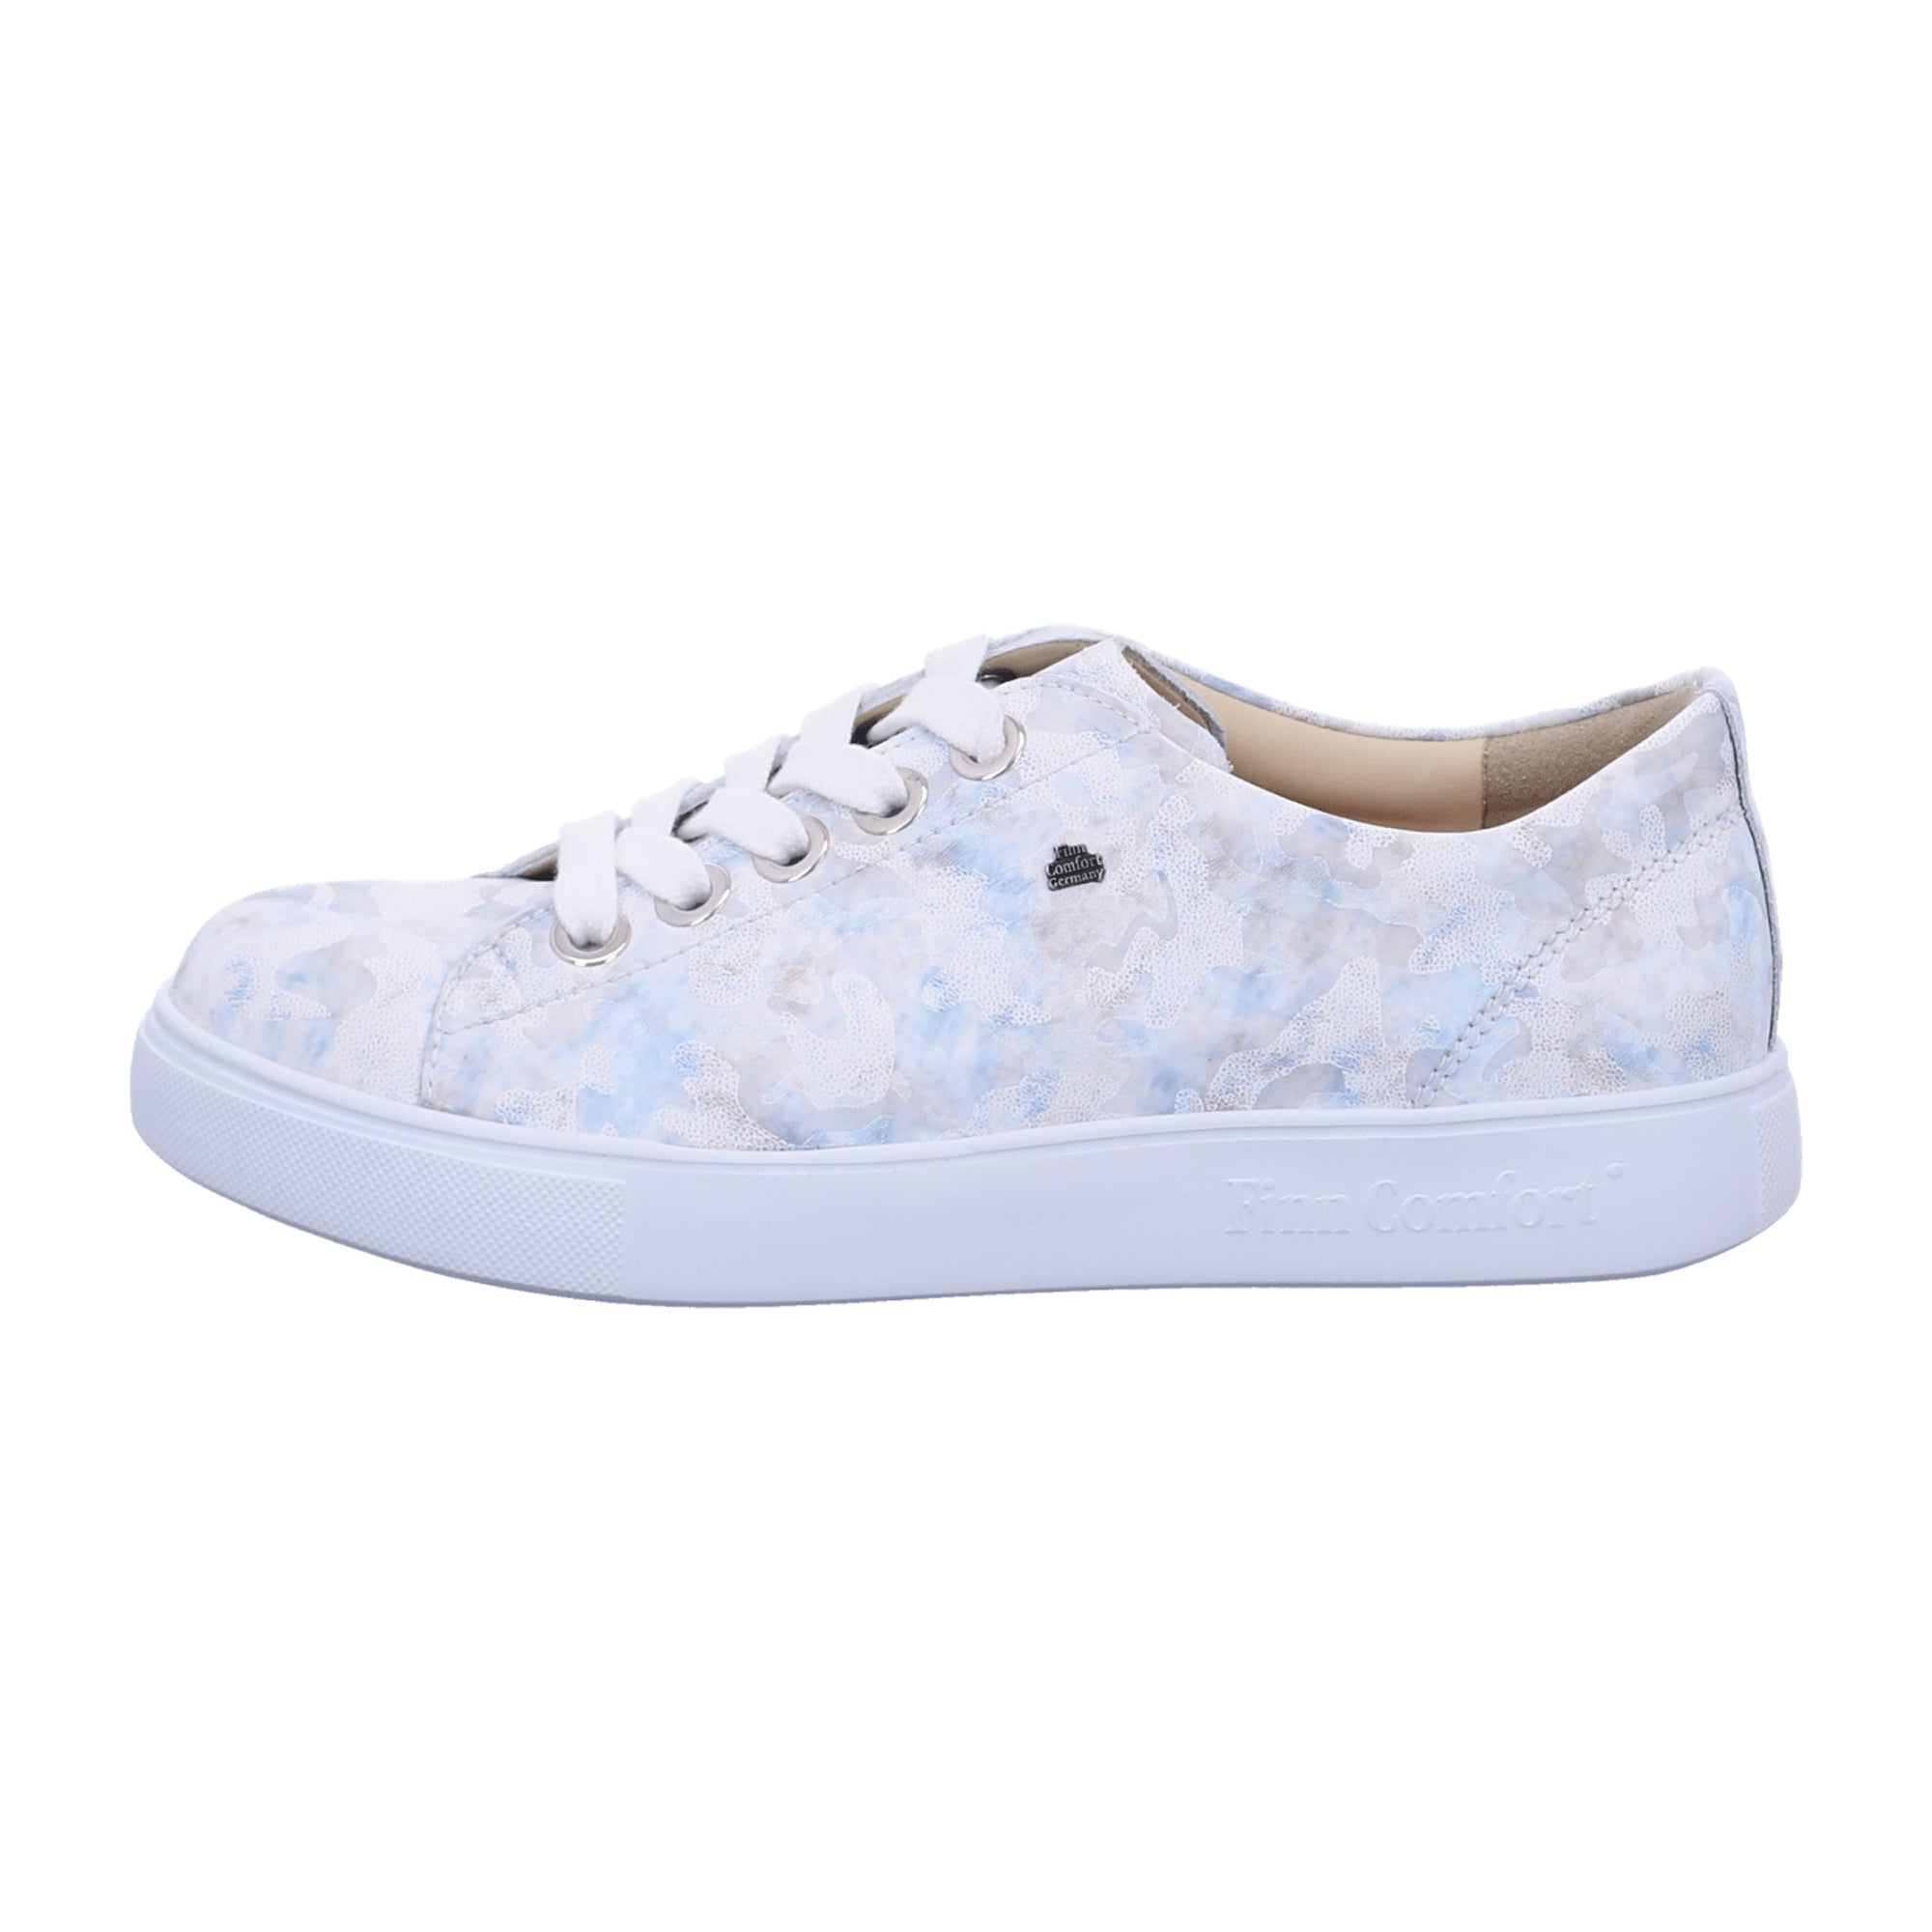 Finn Comfort Elpaso Women's White Sneakers - Stylish & Comfortable